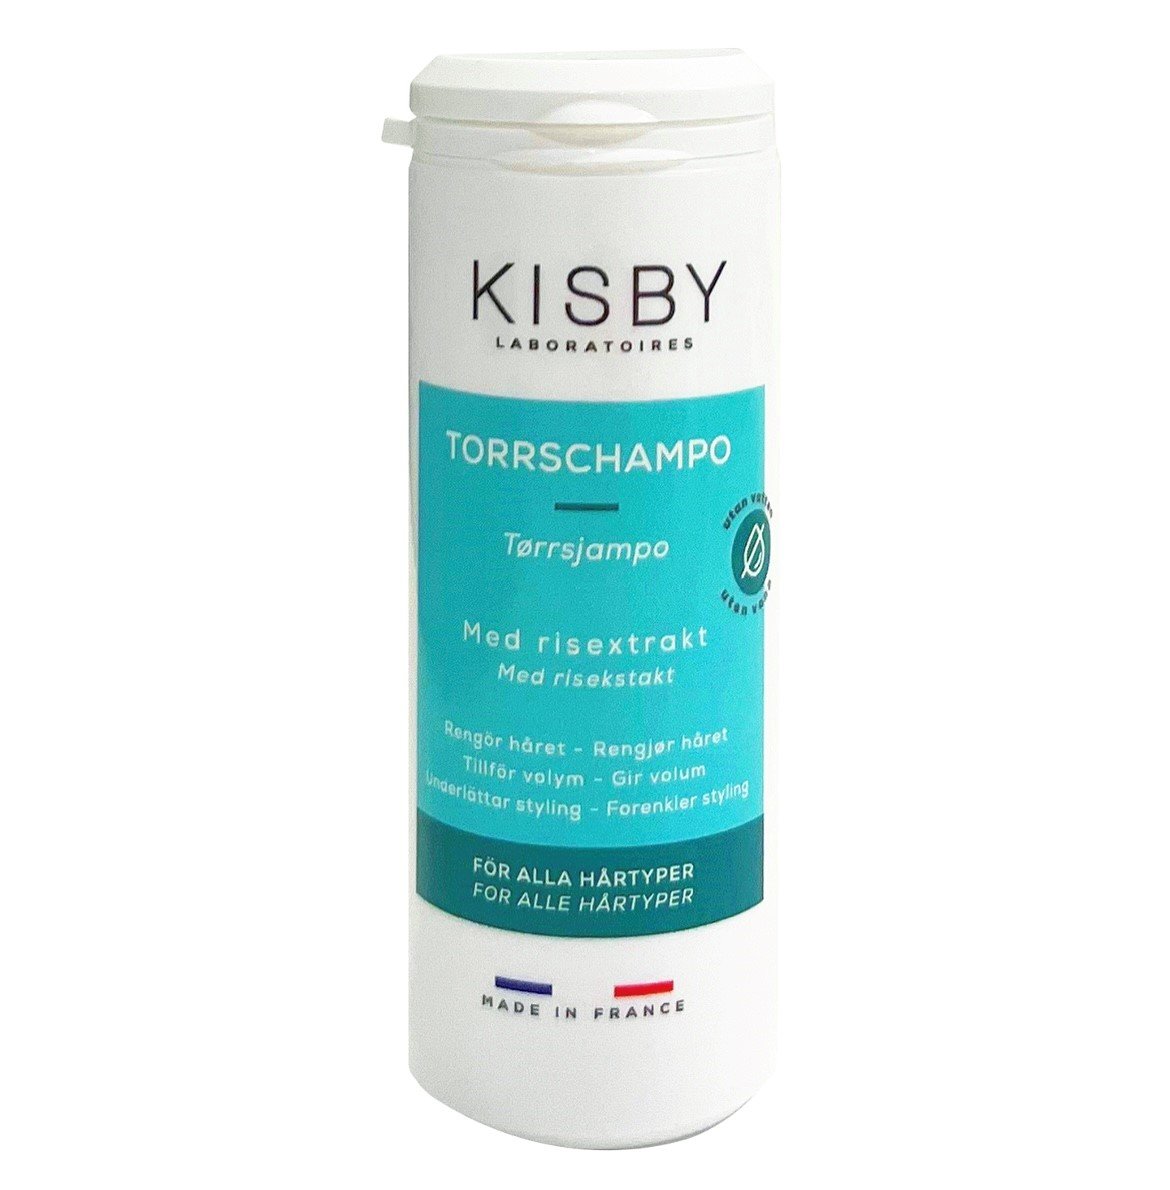 Kisby Laboratoires Dry Shampoo Powder 40g